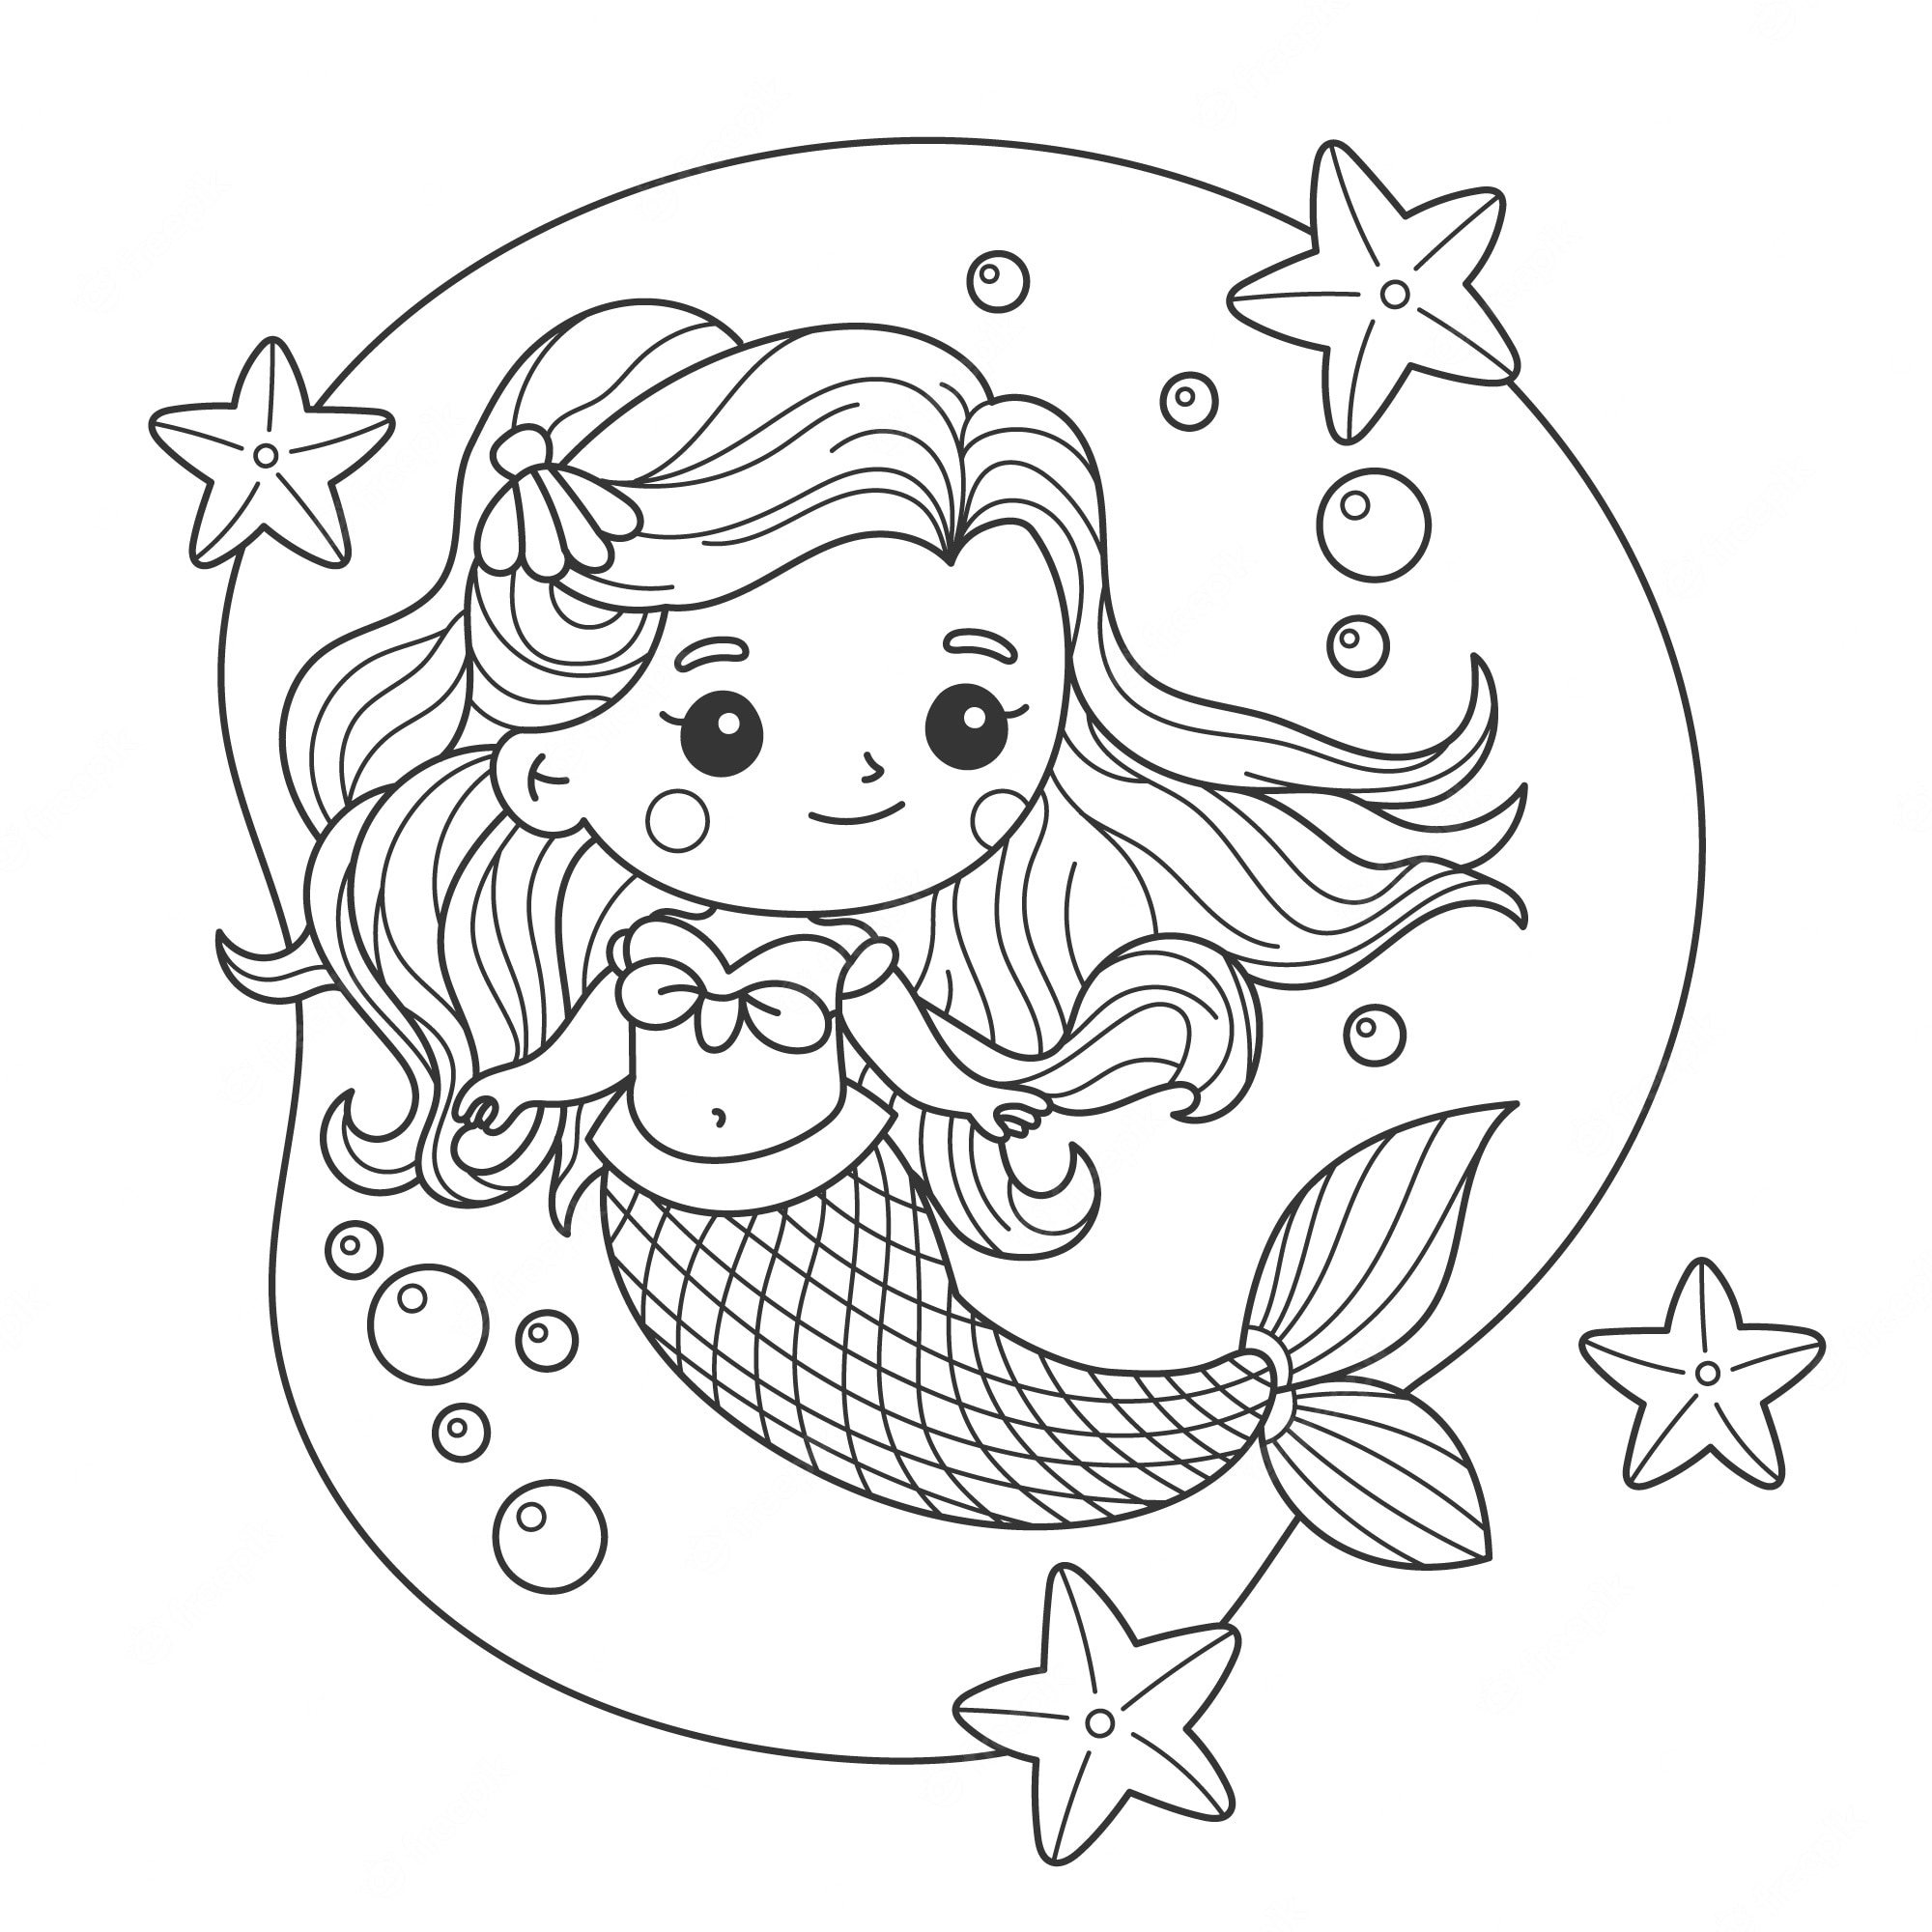 Printable Kid Mermaid Black White Coloring Page for kids.